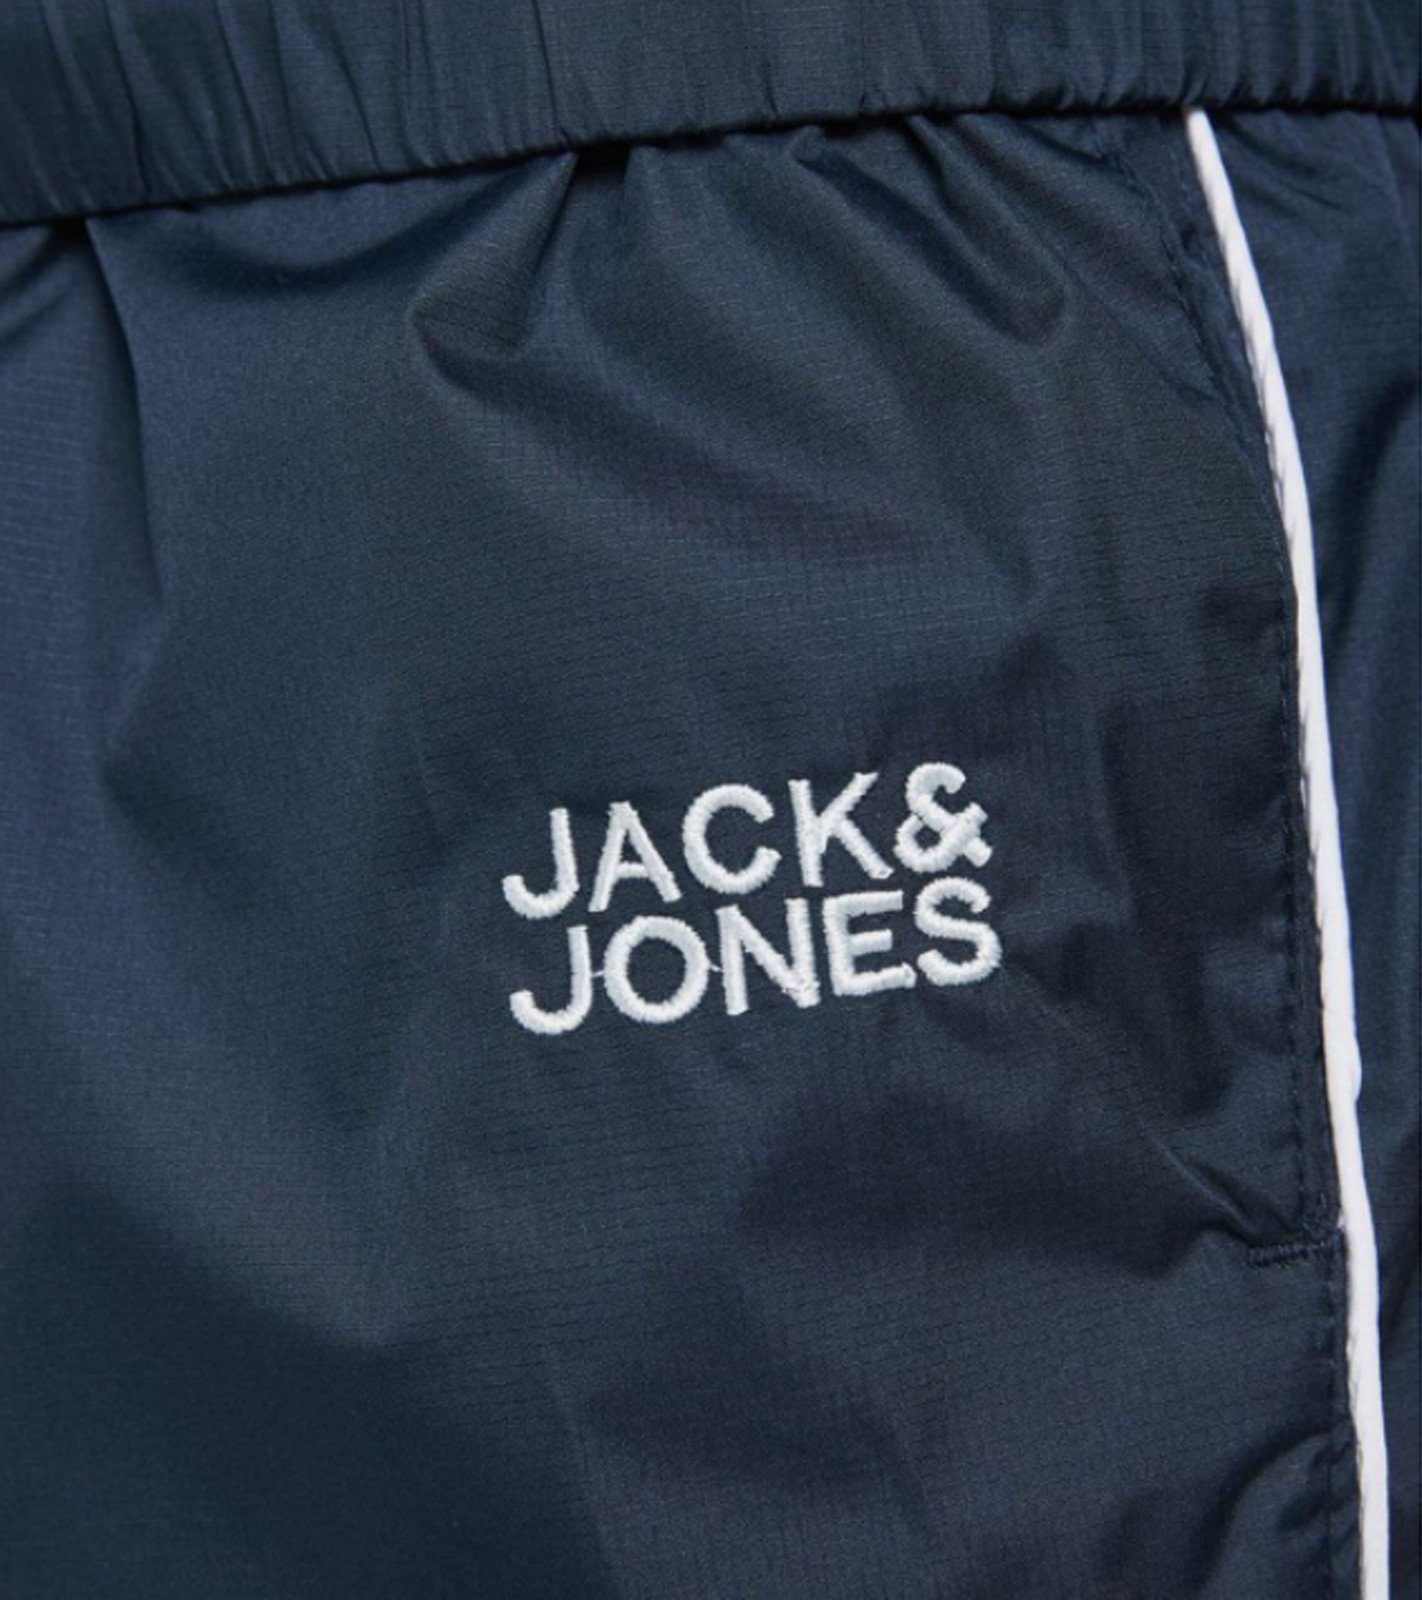 & Jack & Navy Sport-Hose JONES Track Jones JACK Pippen Herren Trainings-Hose Fitness-Hose Ace Pants Trainingshose 12189673